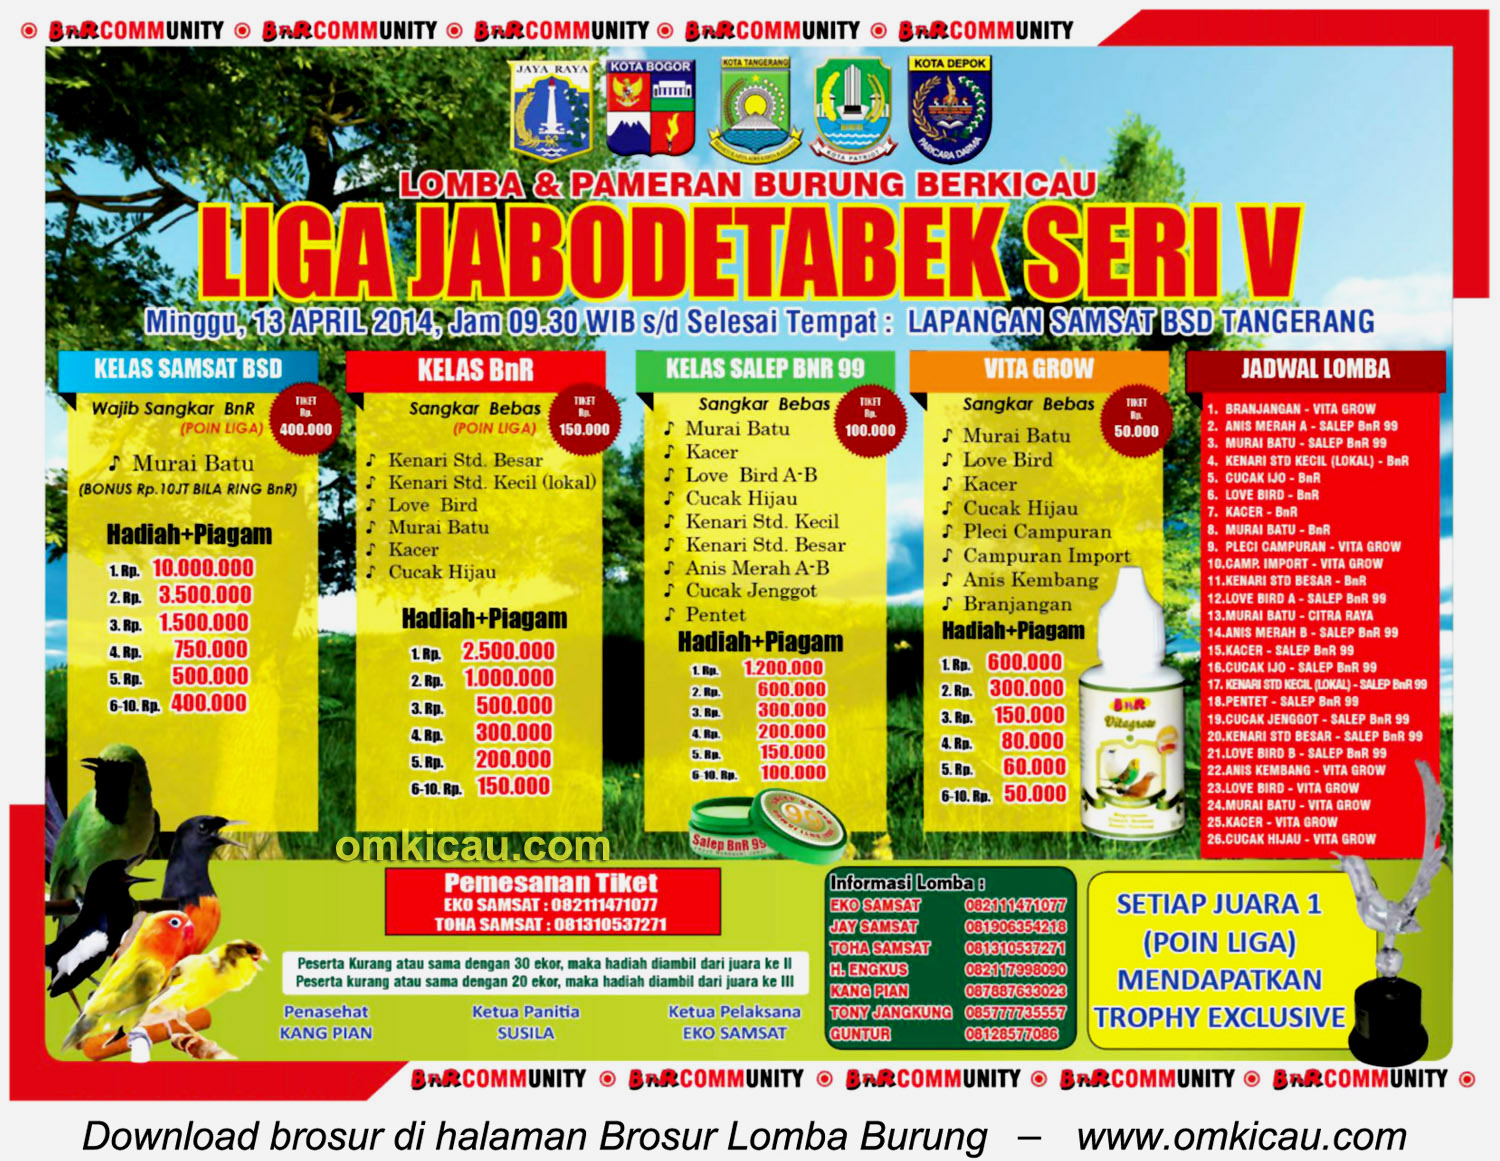 Brosur Lomba Burung Liga Jabodetabek Seri V, Tangerang, 13 April 2014